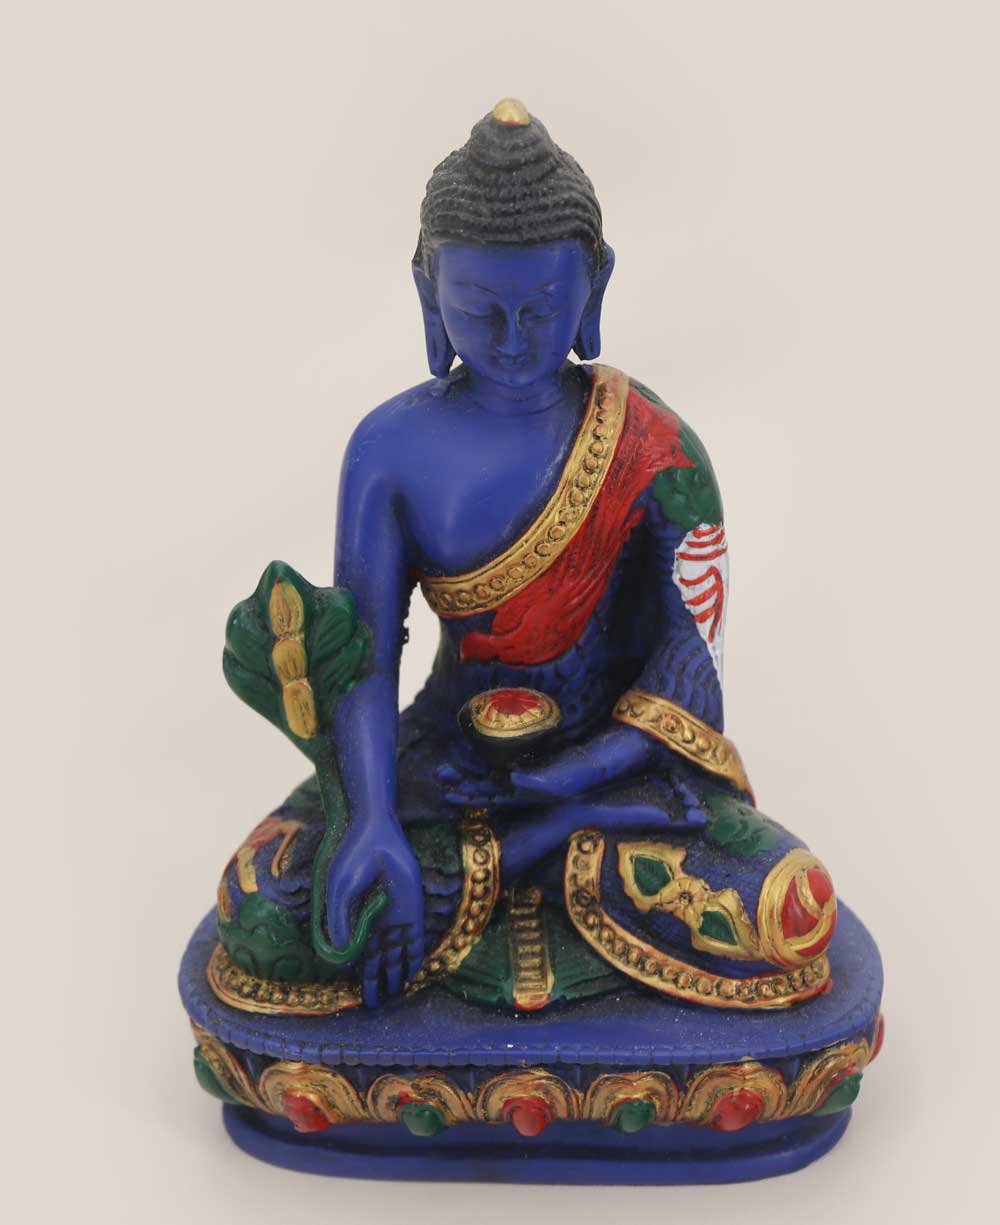 IMP – Multicolored Blue Medicine Buddha Statue, 5.5 Inches - Sculptures & Statues